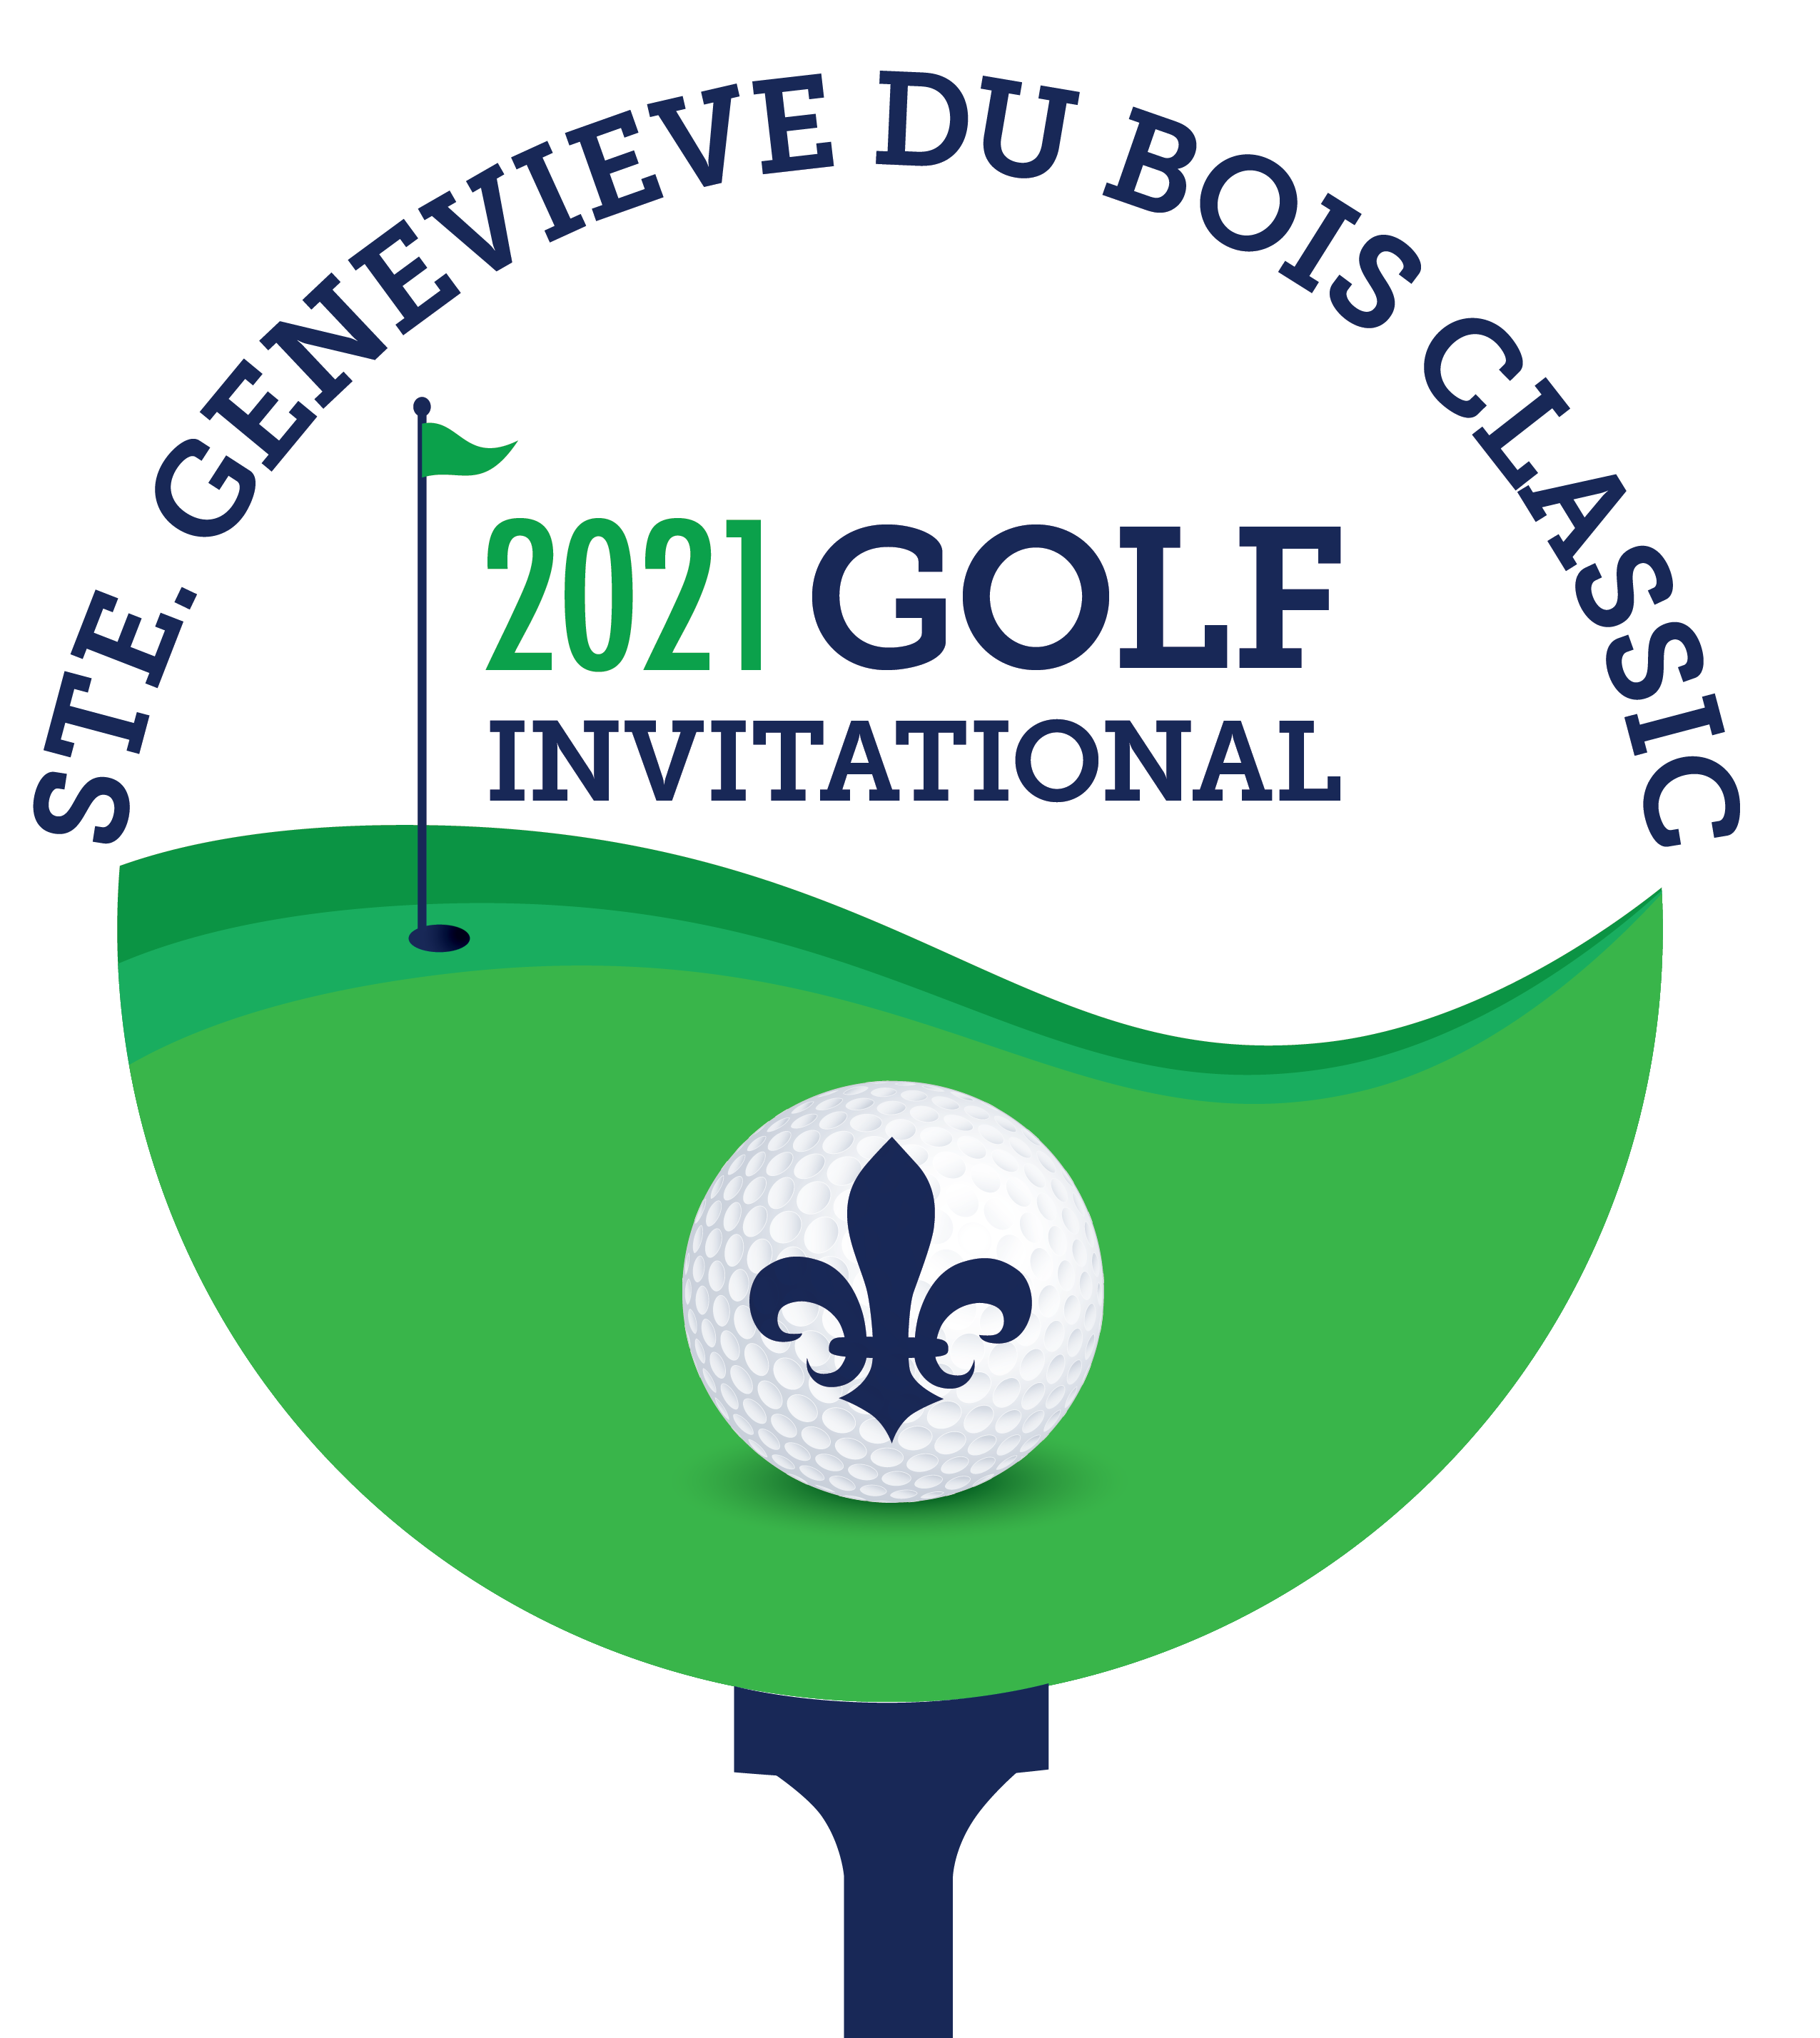 Ste. Genevieve Du Bois Classic, 2021 Golf Invitational